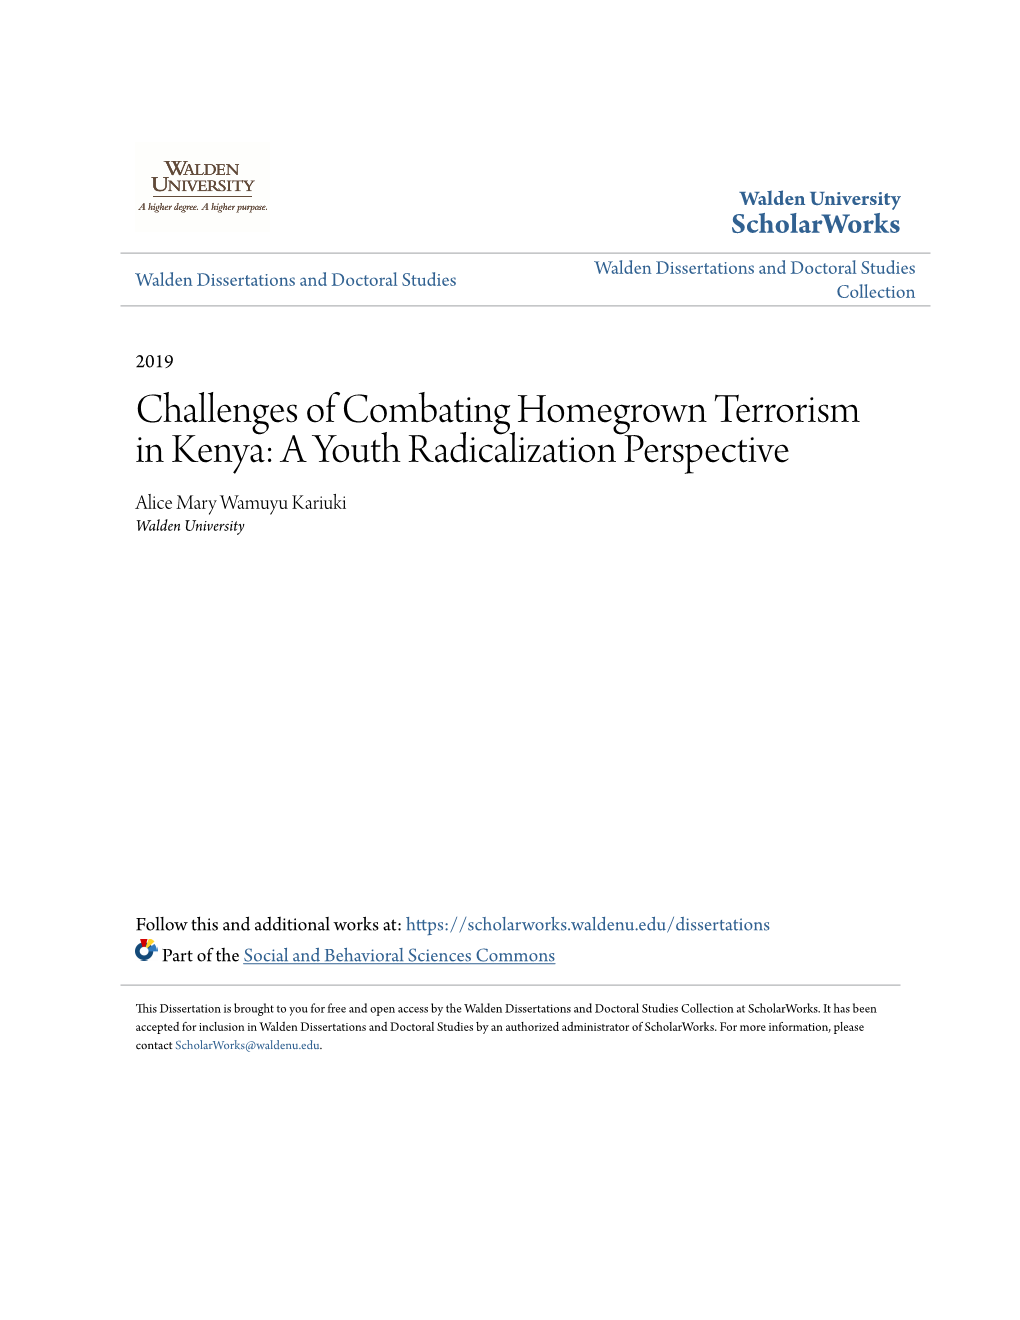 Challenges of Combating Homegrown Terrorism in Kenya: a Youth Radicalization Perspective Alice Mary Wamuyu Kariuki Walden University